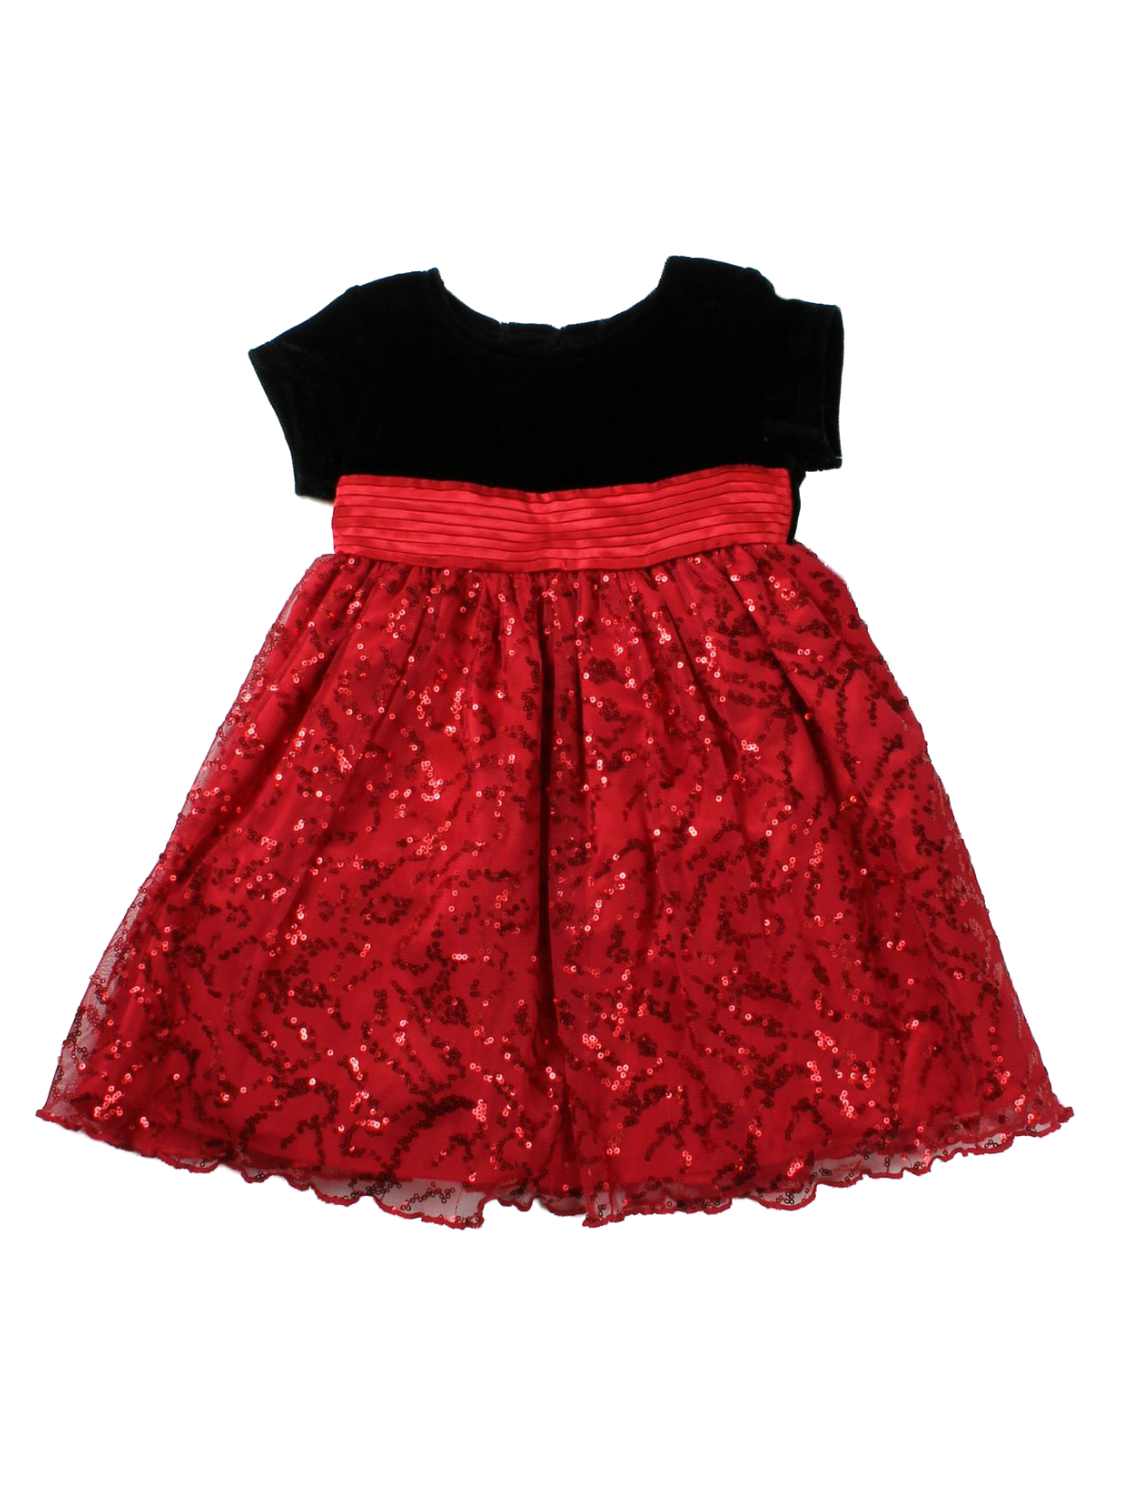 Blueberi Boulevard Infant Girls Velour & Red Sequin Holiday Party Dress 24m